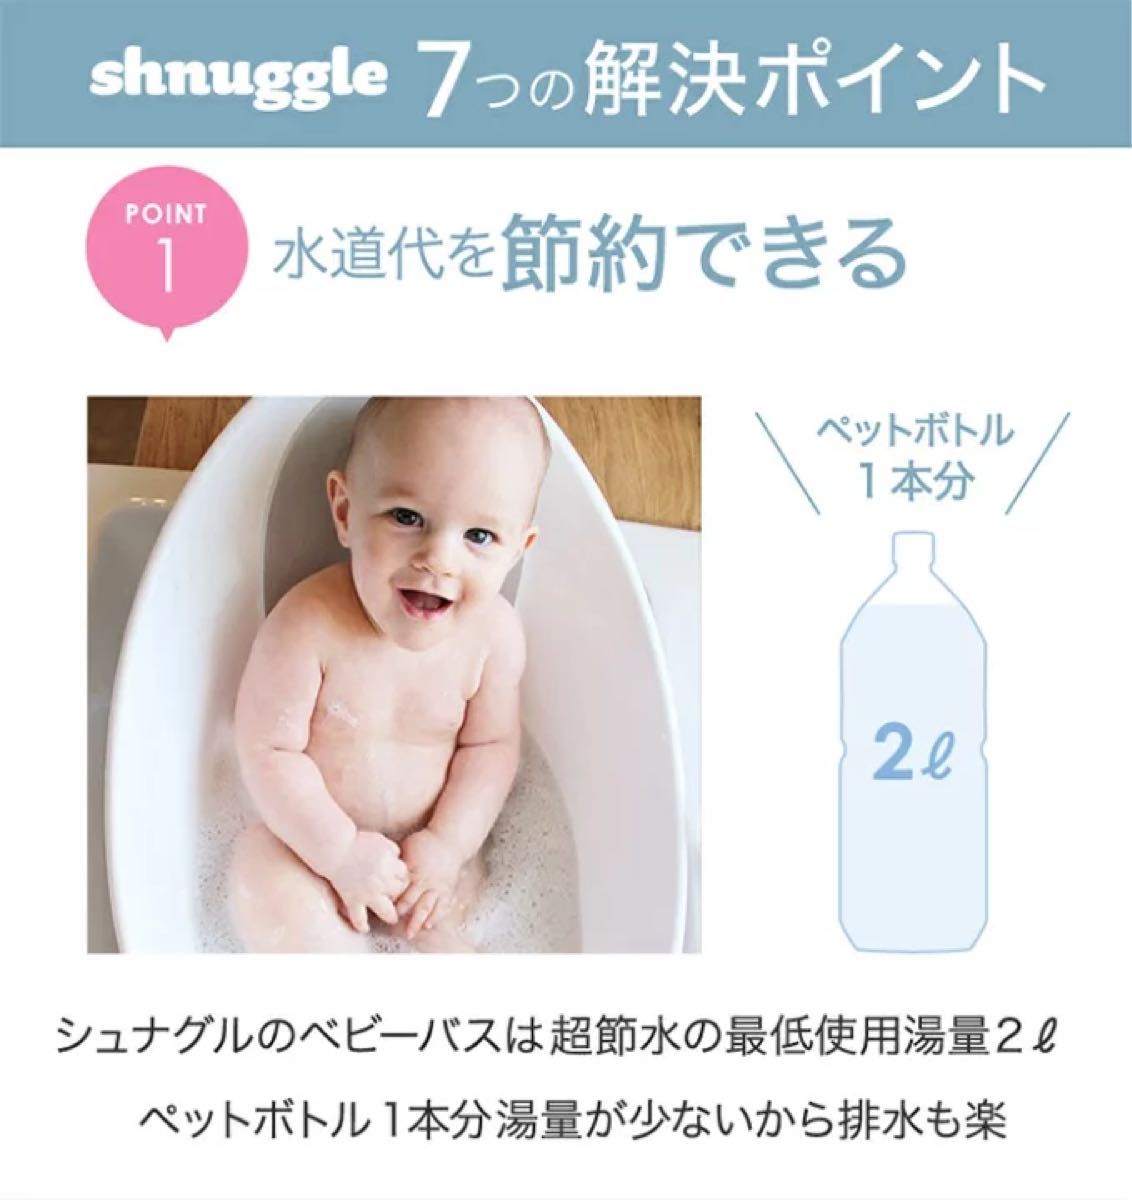 shnuggle bath シュナグルバス 赤ちゃん バス